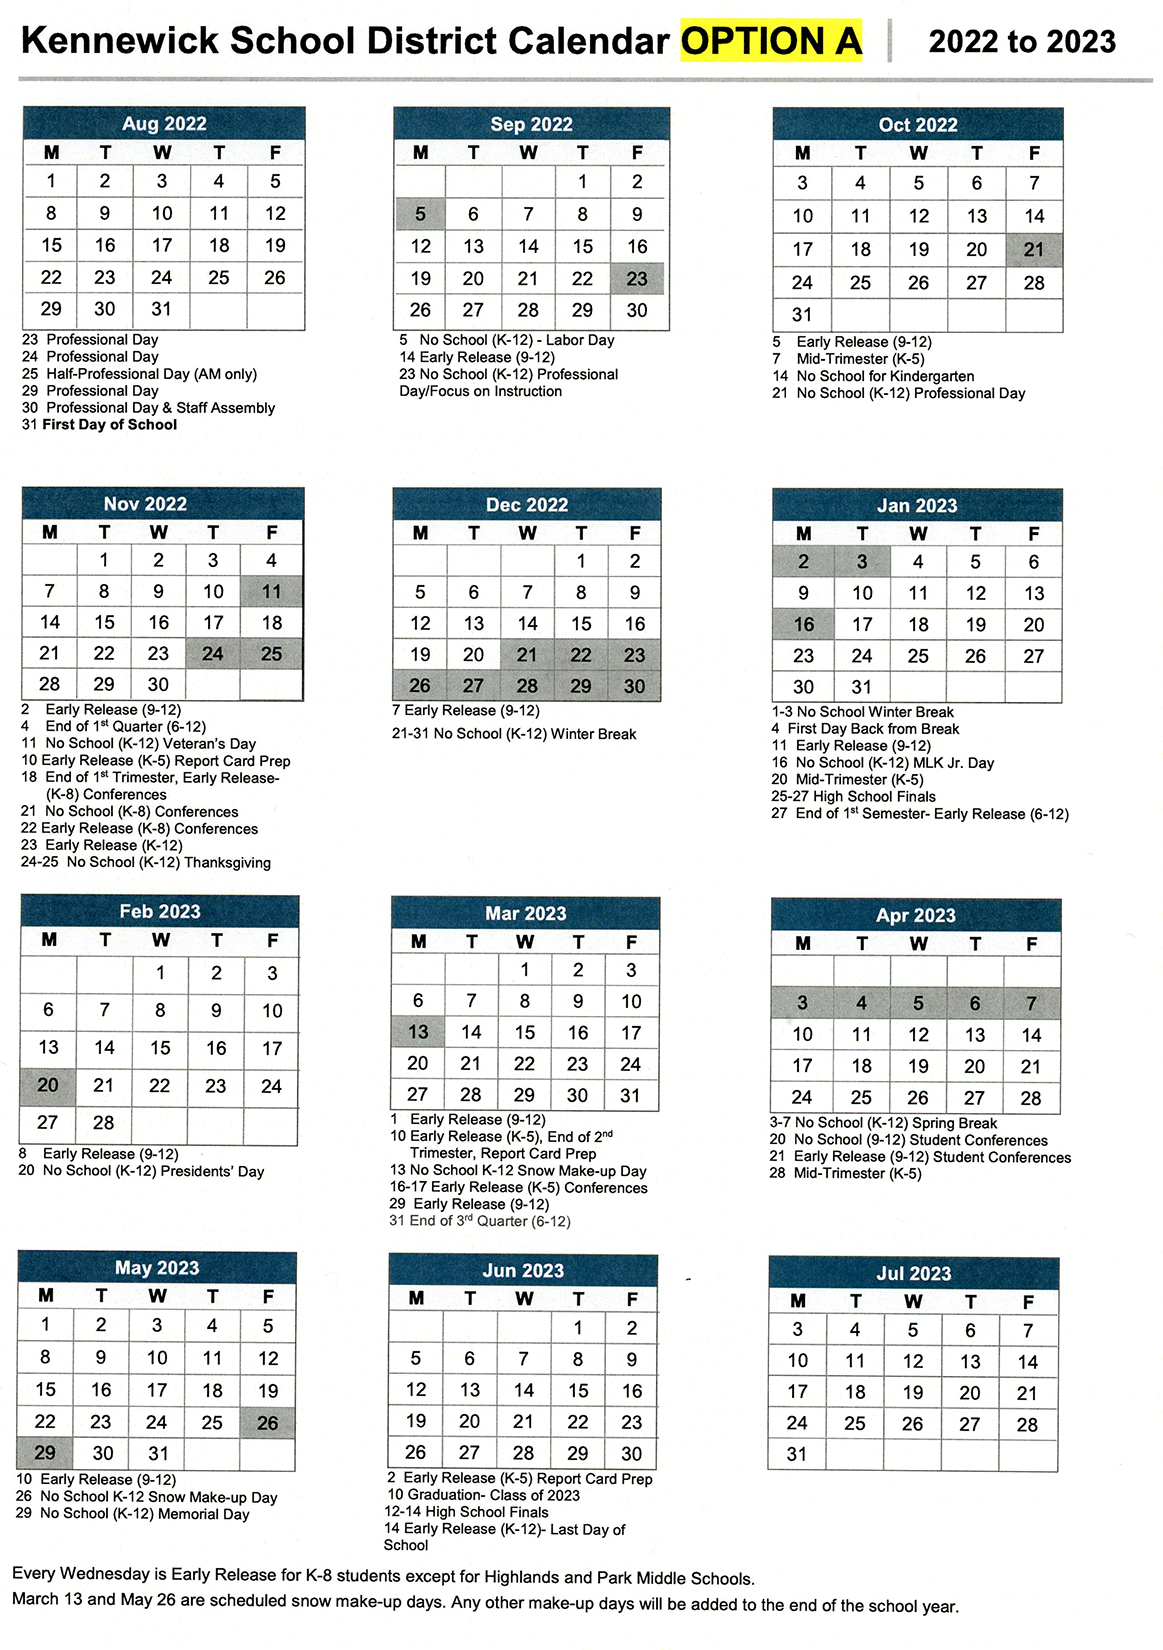 2022-23 Calendar Option A